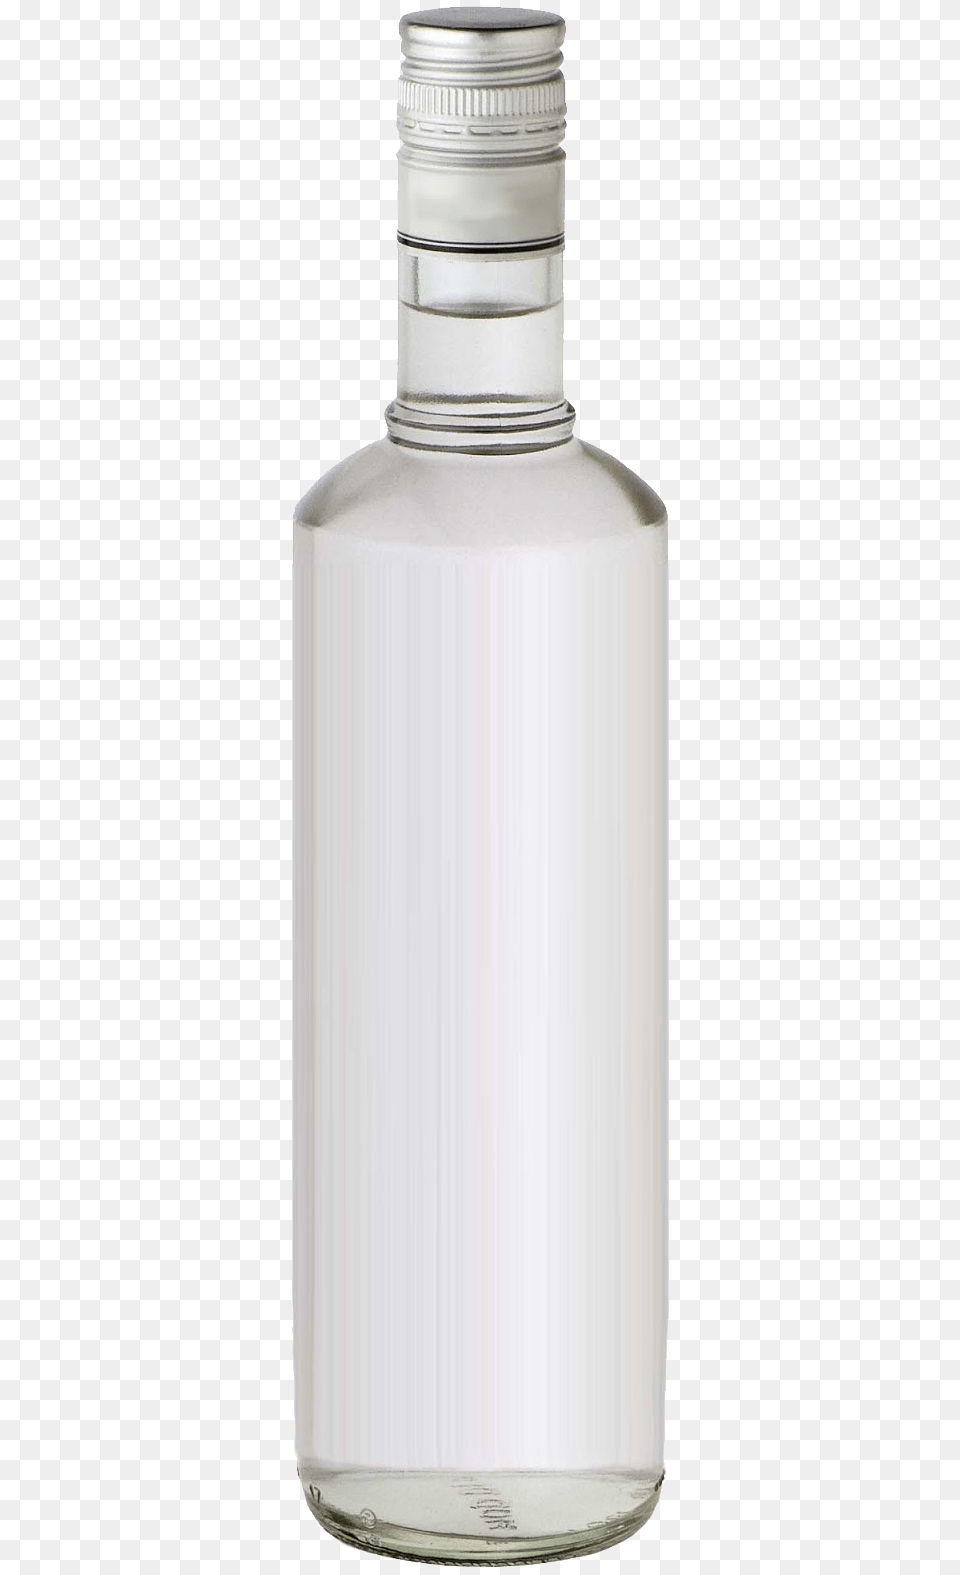 Vodka, Jar, Bottle, Glass, Pottery Png Image